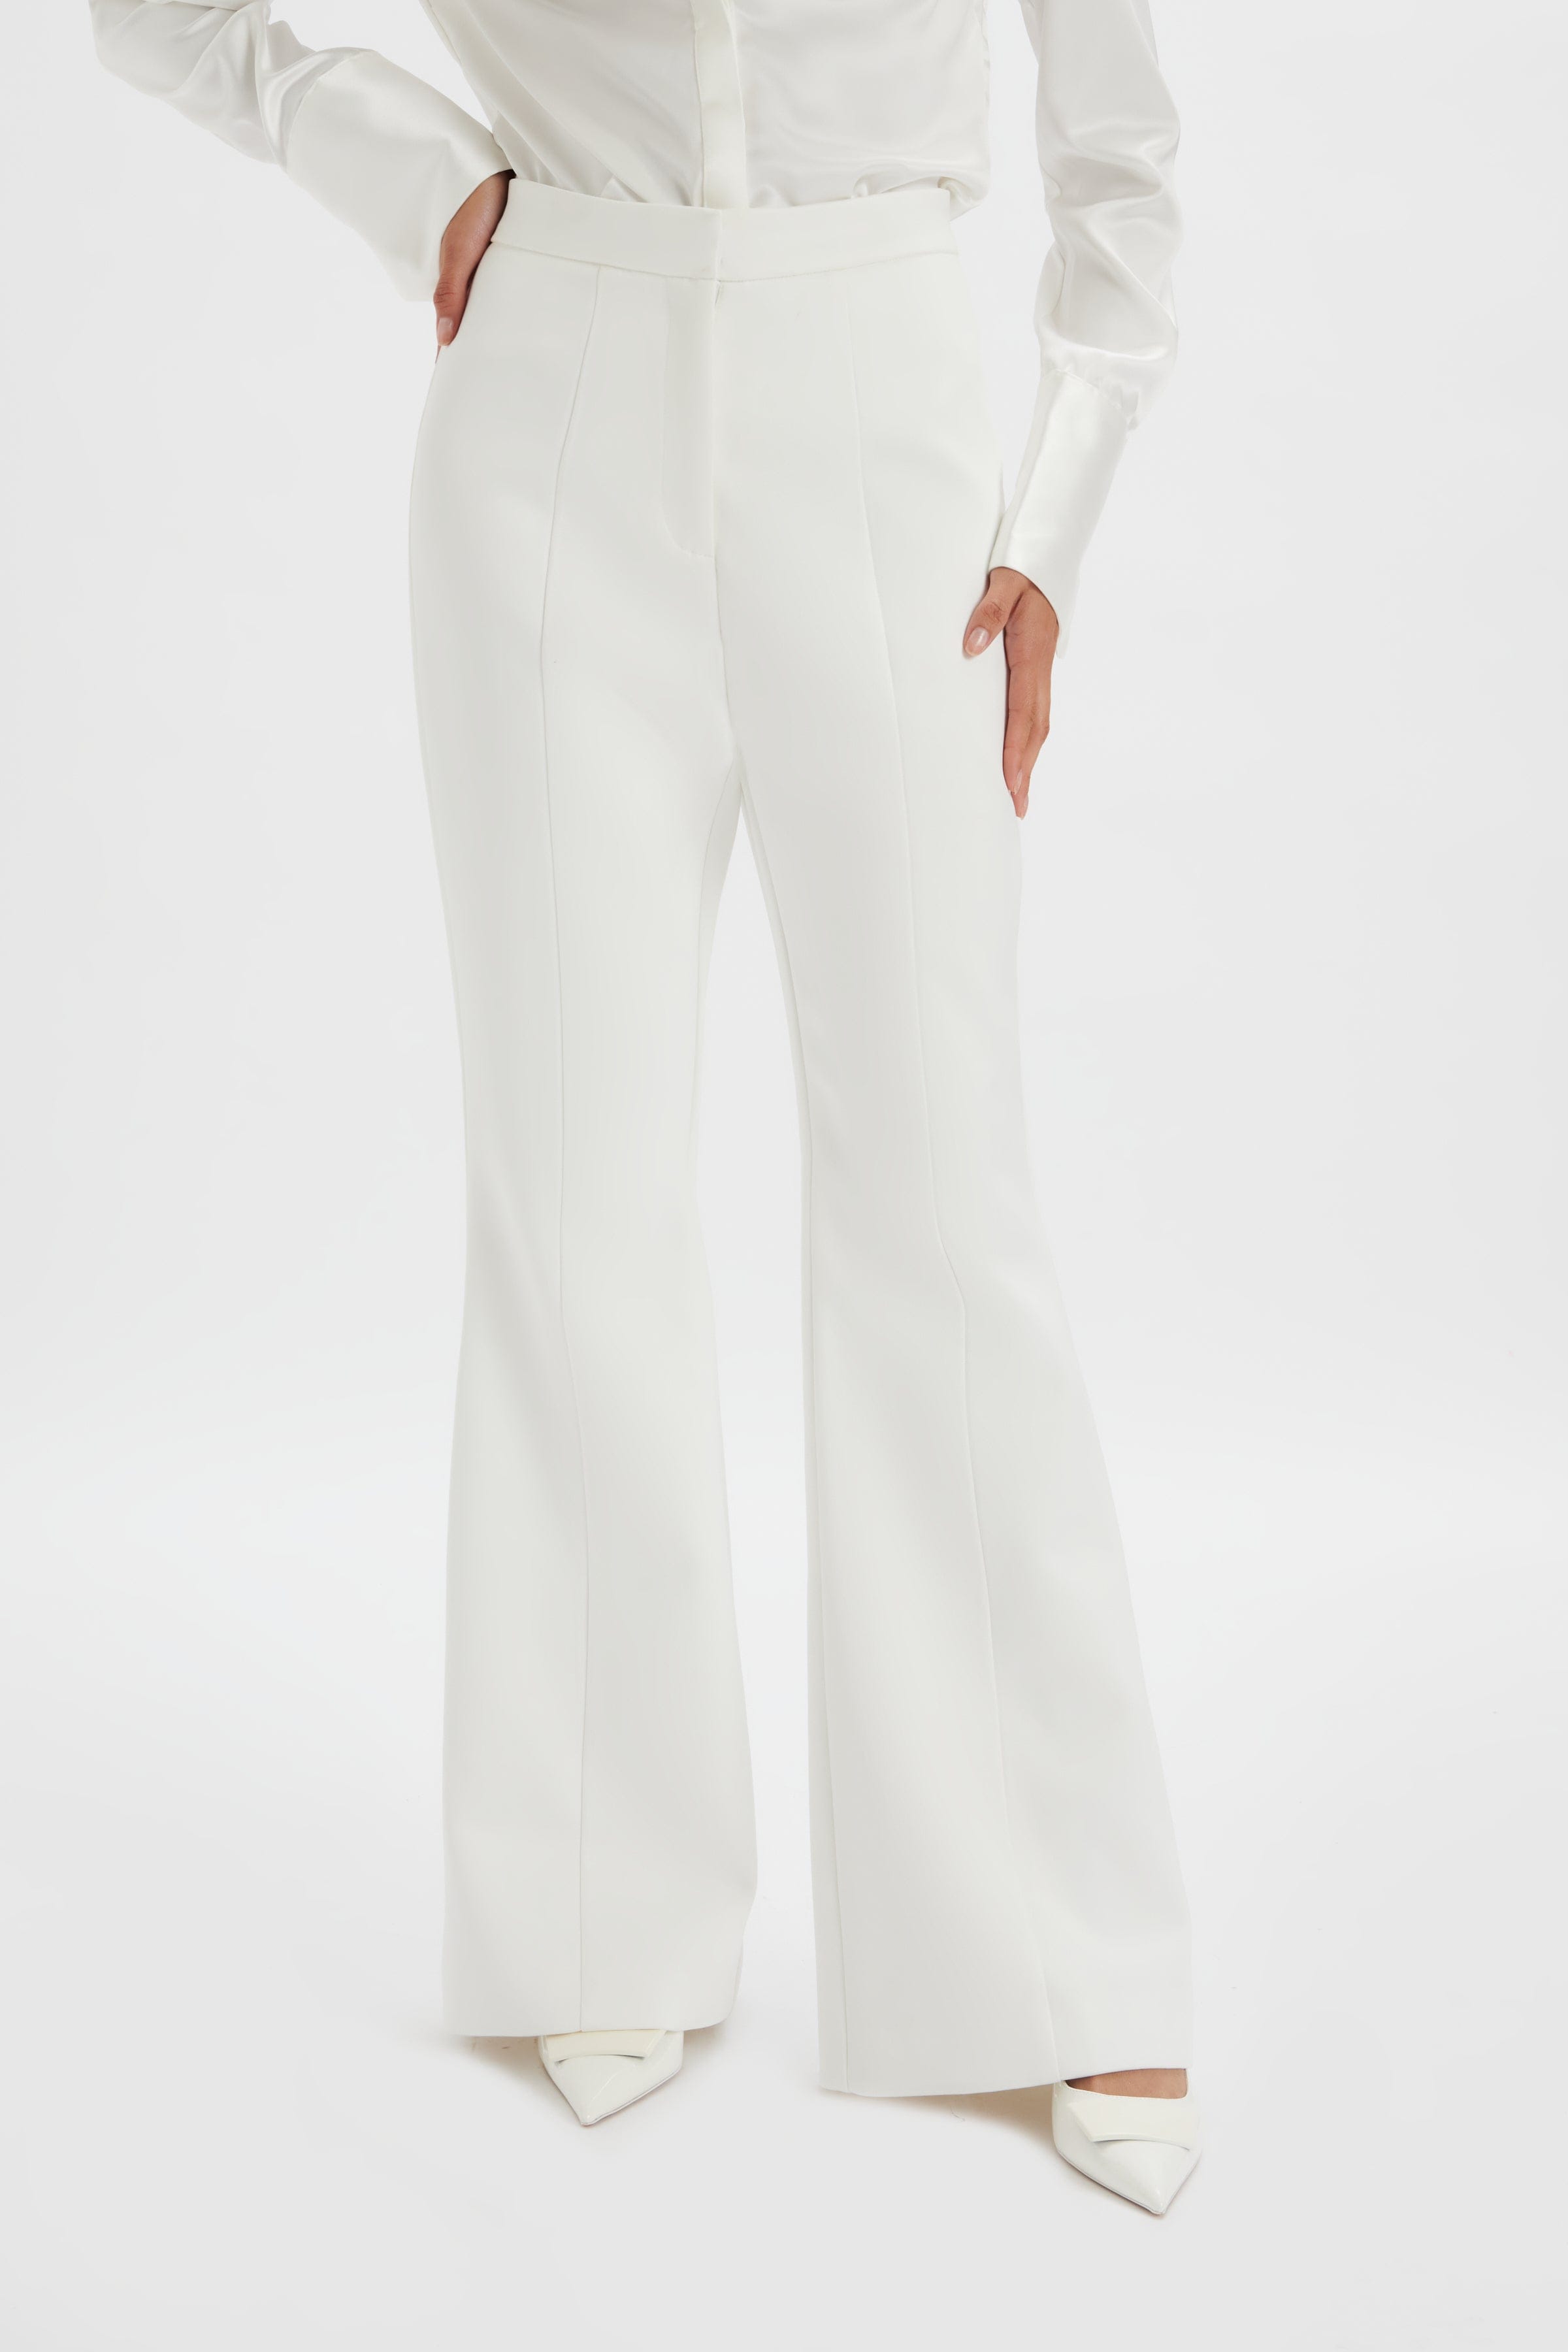 EMELIE Fit & Flare Satin Trouser in White